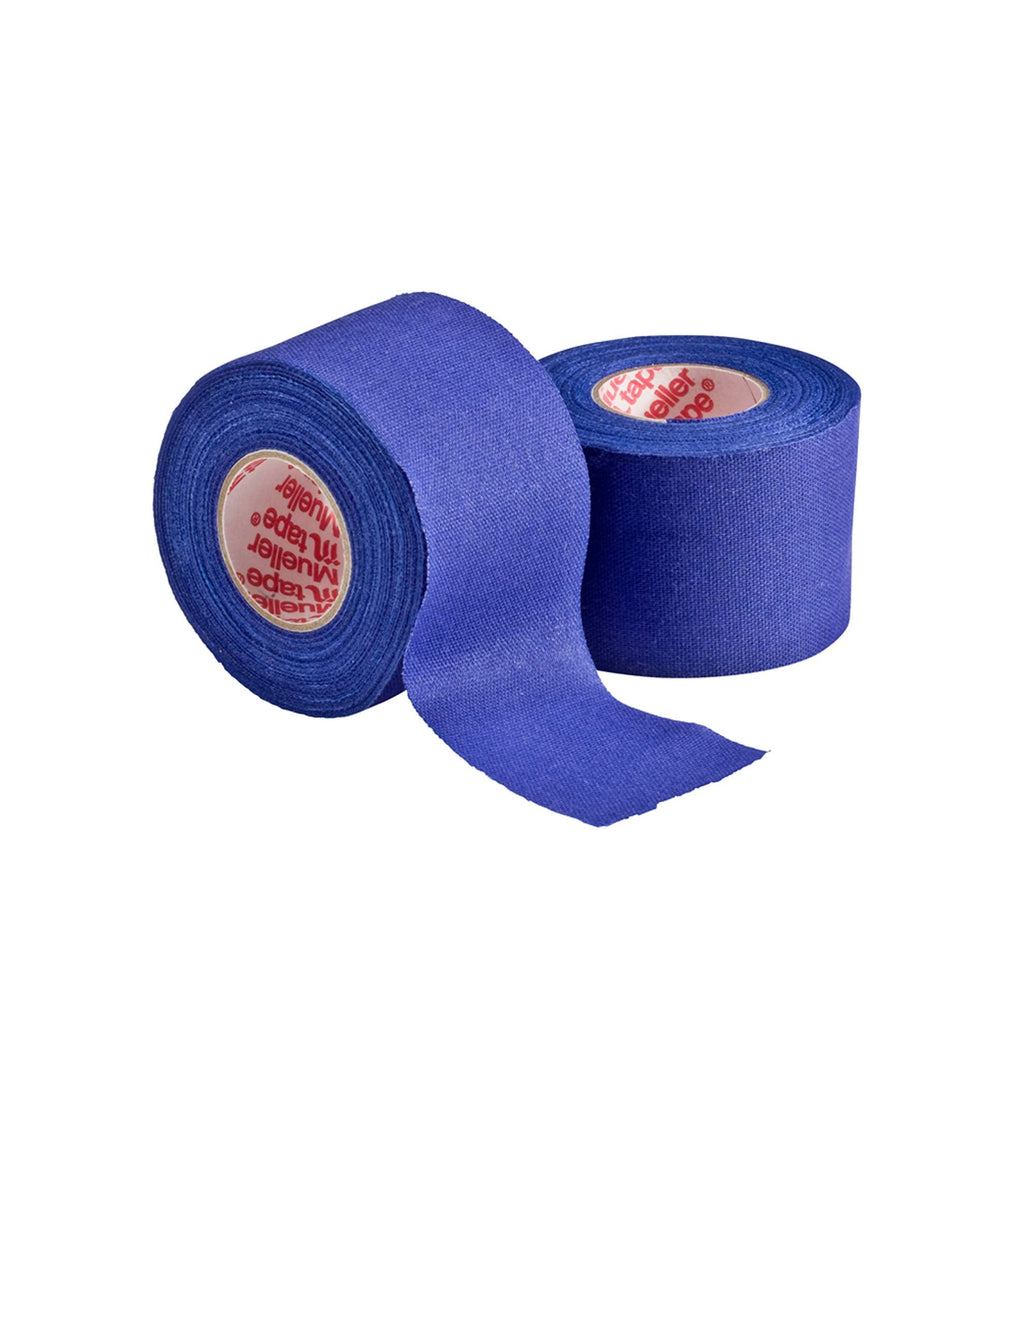 [Australia] - Mueller Athletic Tape, 1.5" X 10yd Roll, Royal Blue, 2 pack 